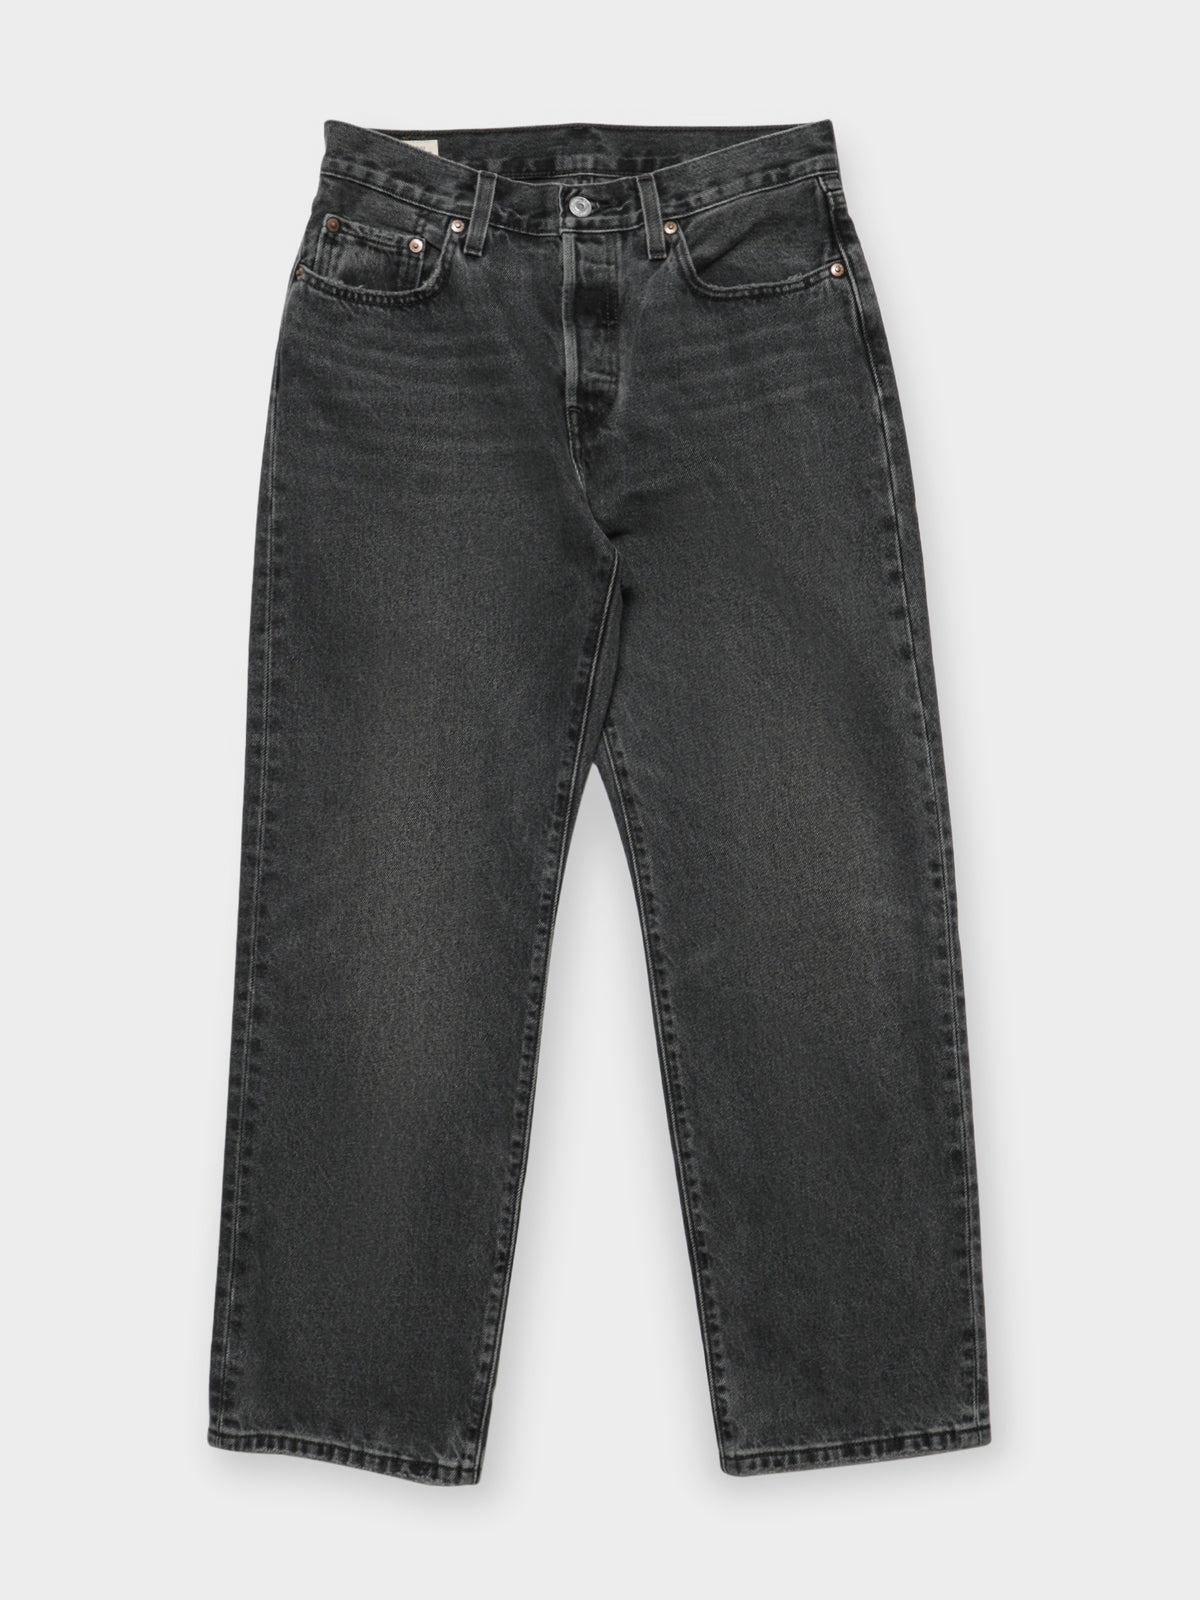 90s 501 Jeans in Fire Starter Black (28 length)